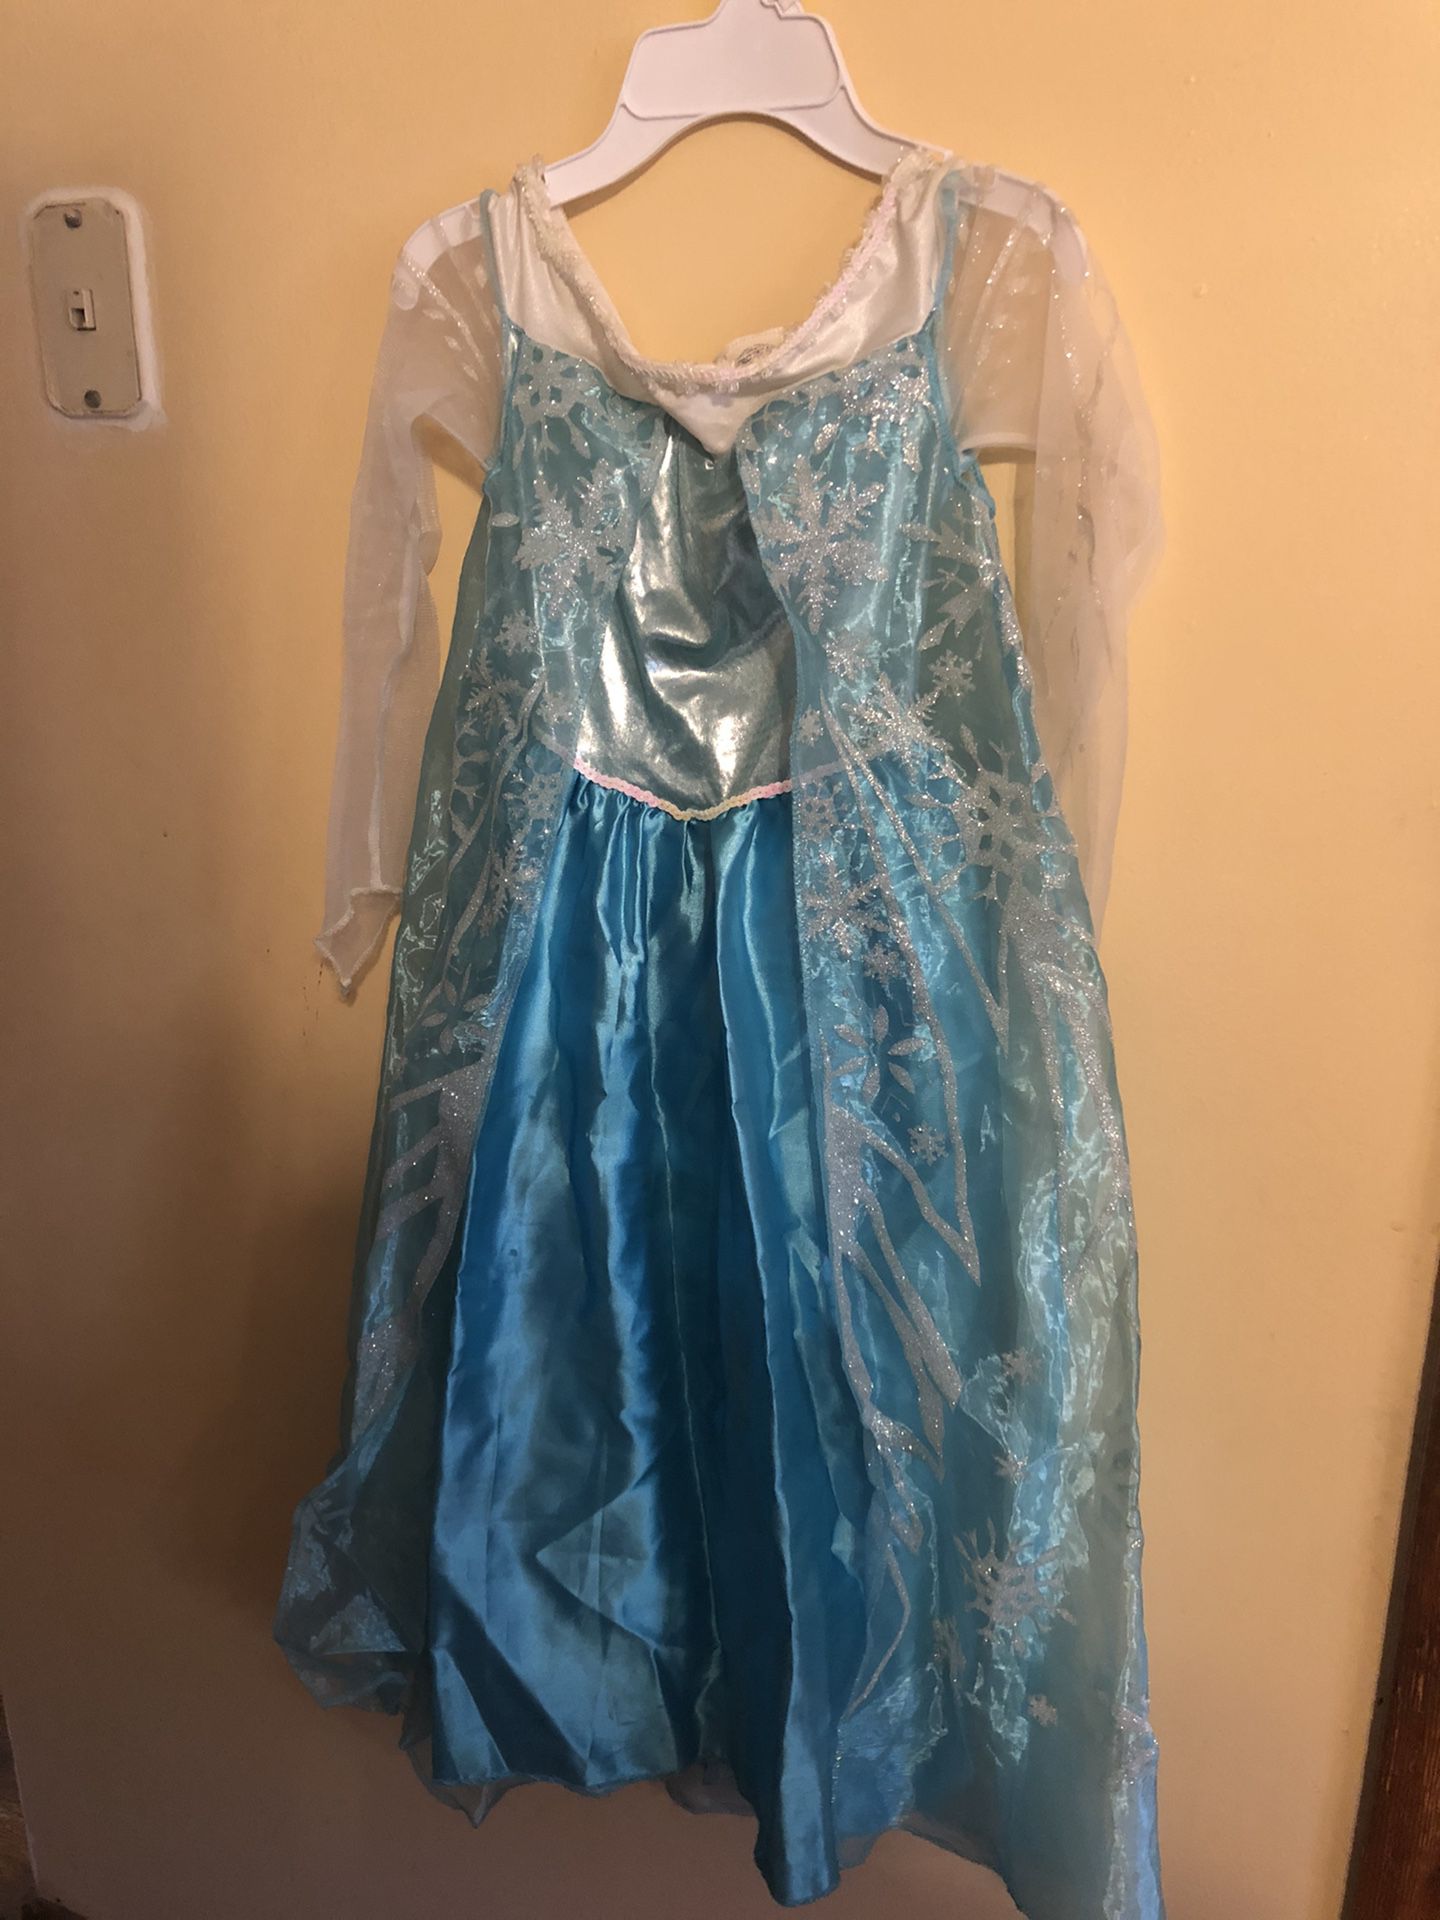 Size 7 kids Elsa dress